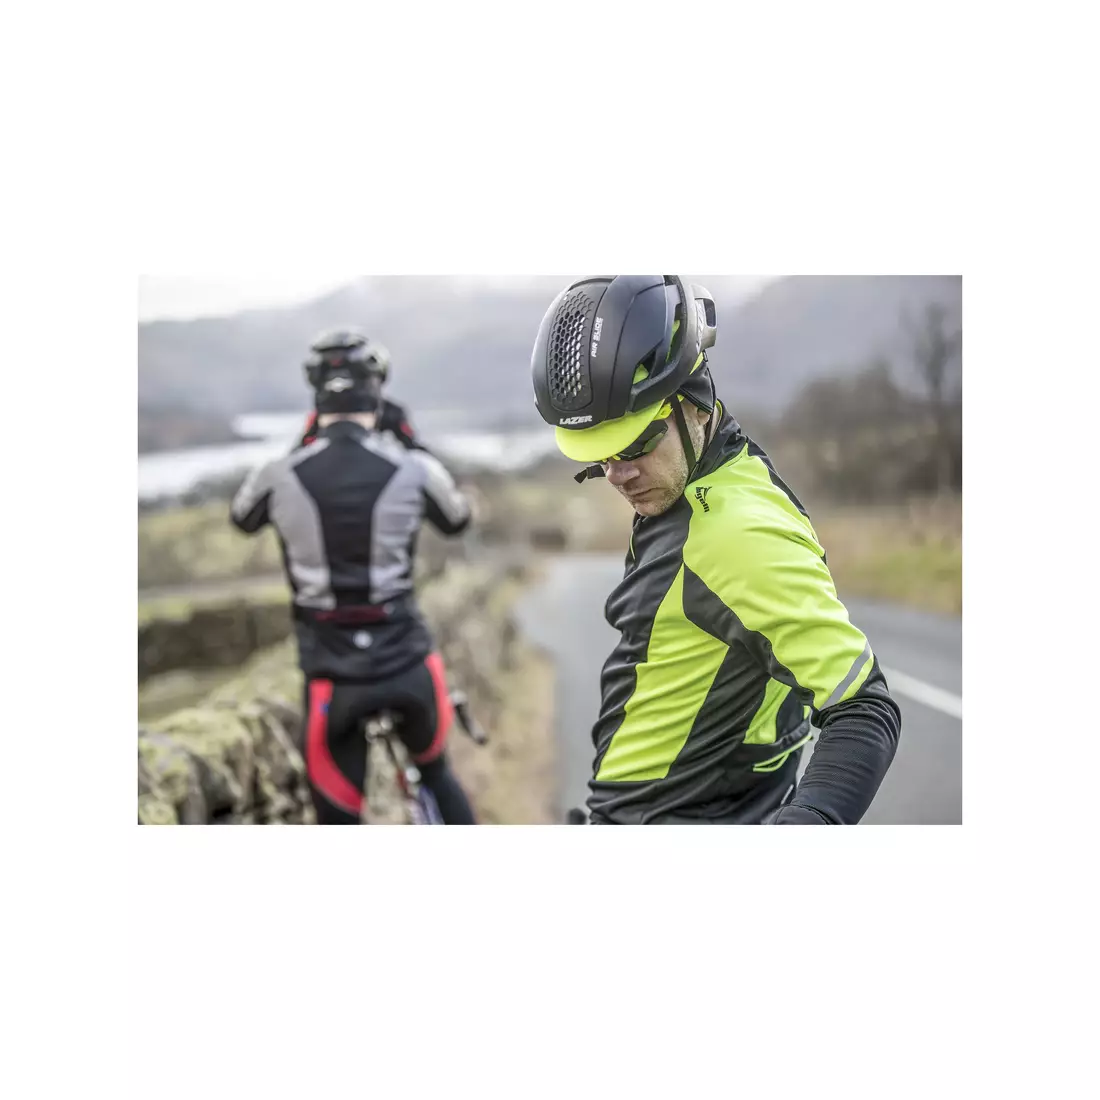 ROGELLI UBALDO 3.0 winter cycling jacket, black-fluorine